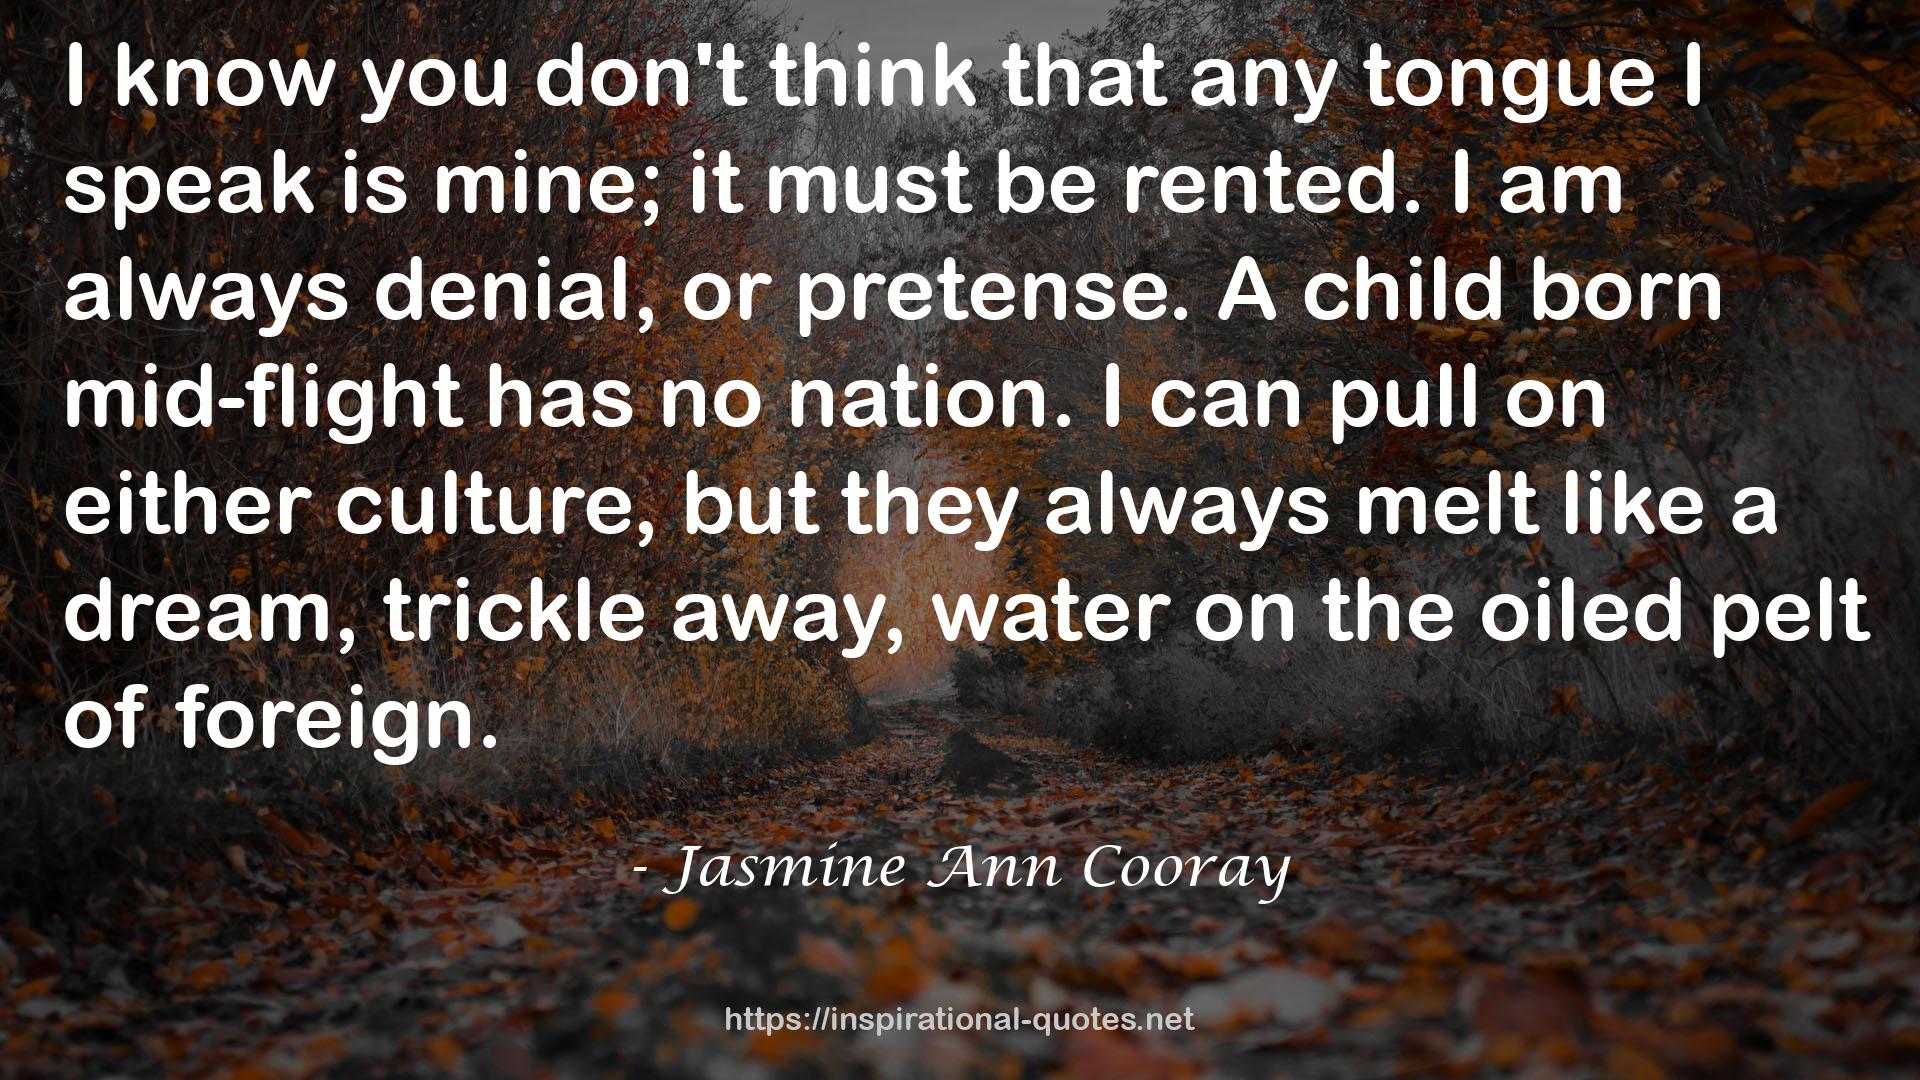 Jasmine Ann Cooray QUOTES